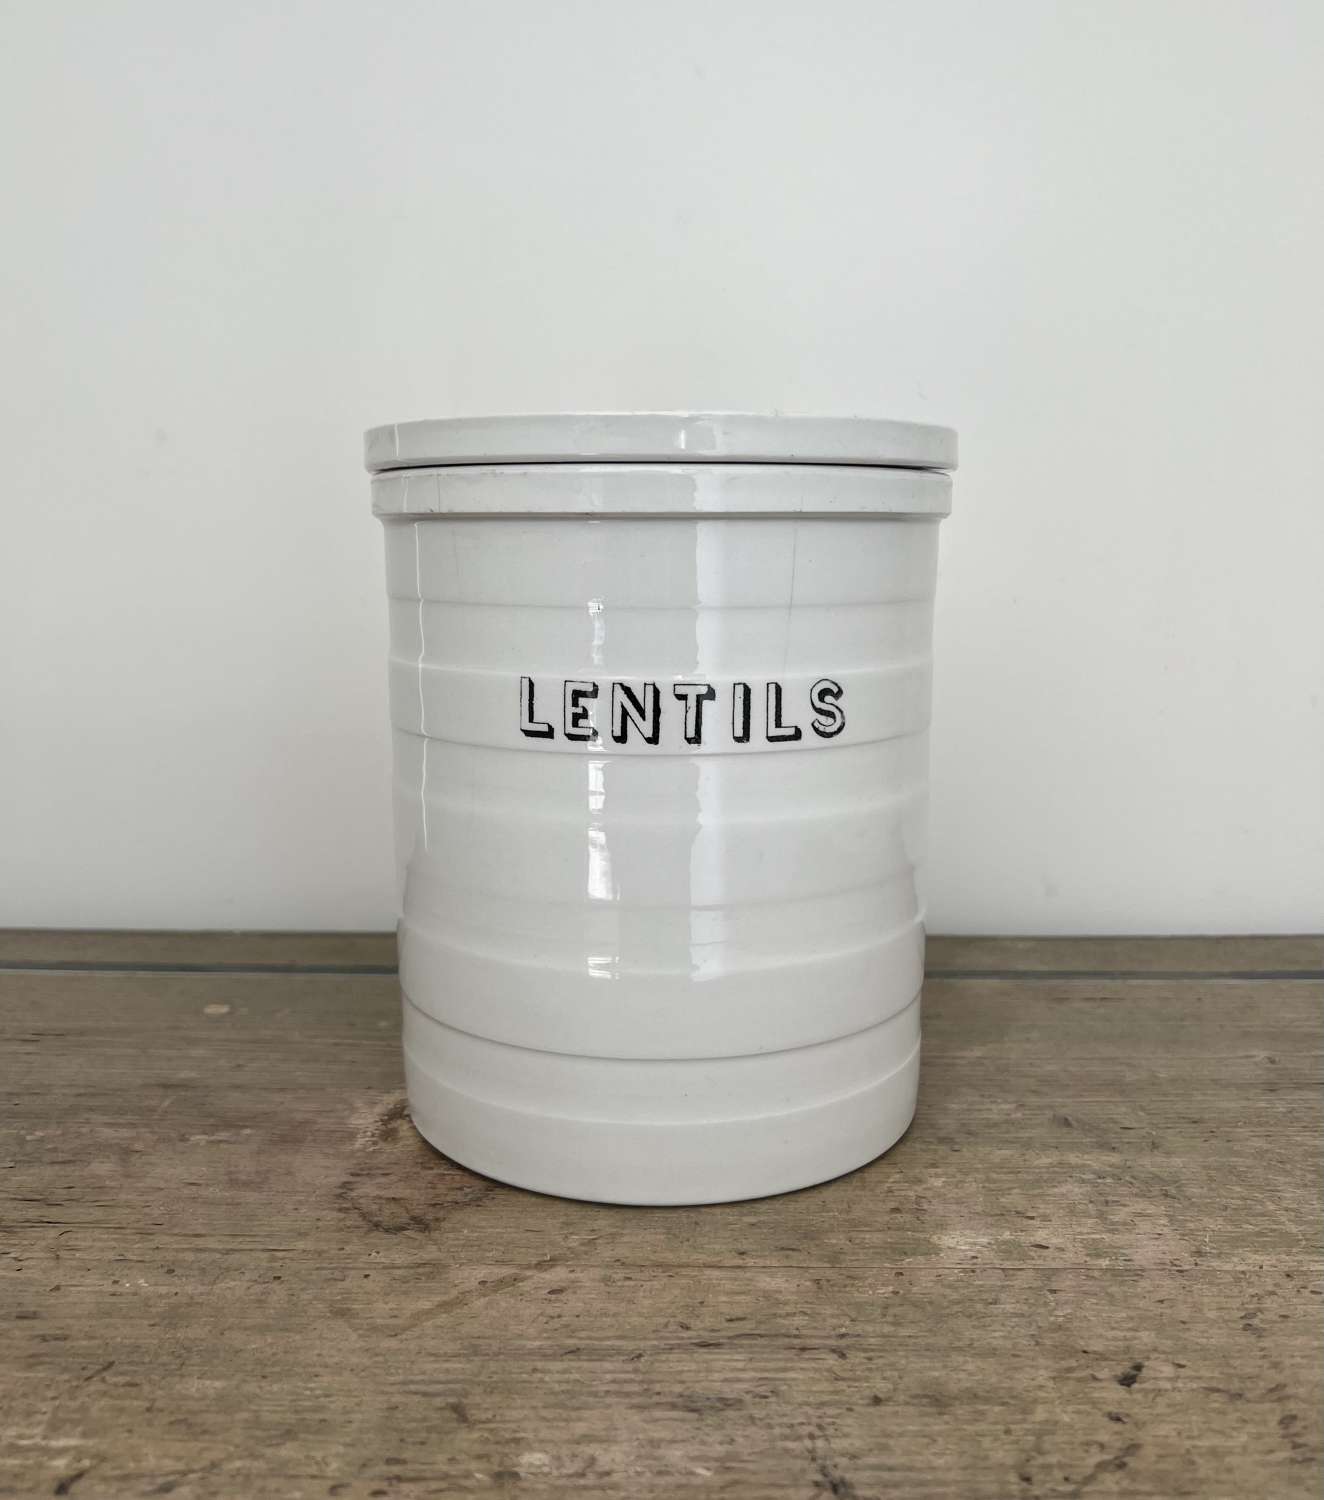 Late Victorian White Banded Cetem Ware Kitchen Jar - Lentils